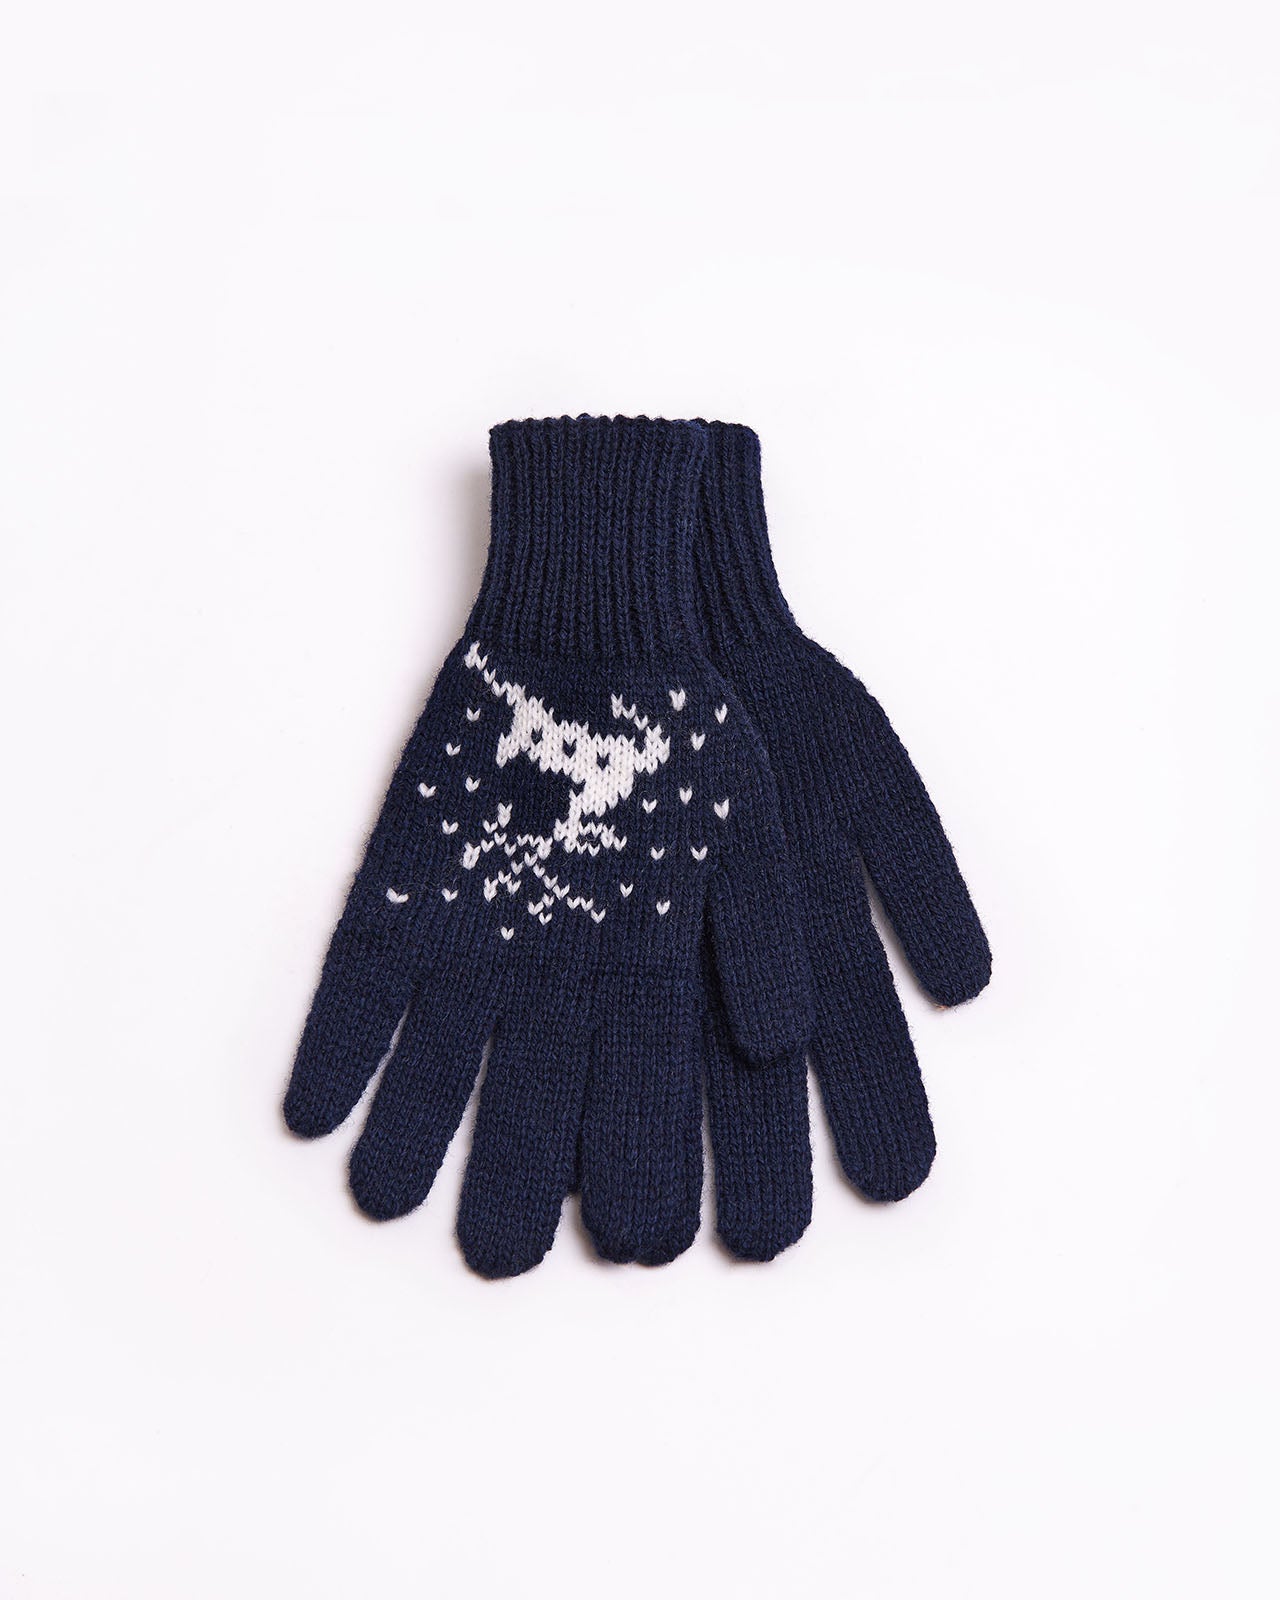 Reindeer woolen gloves | Natural Style Estonia